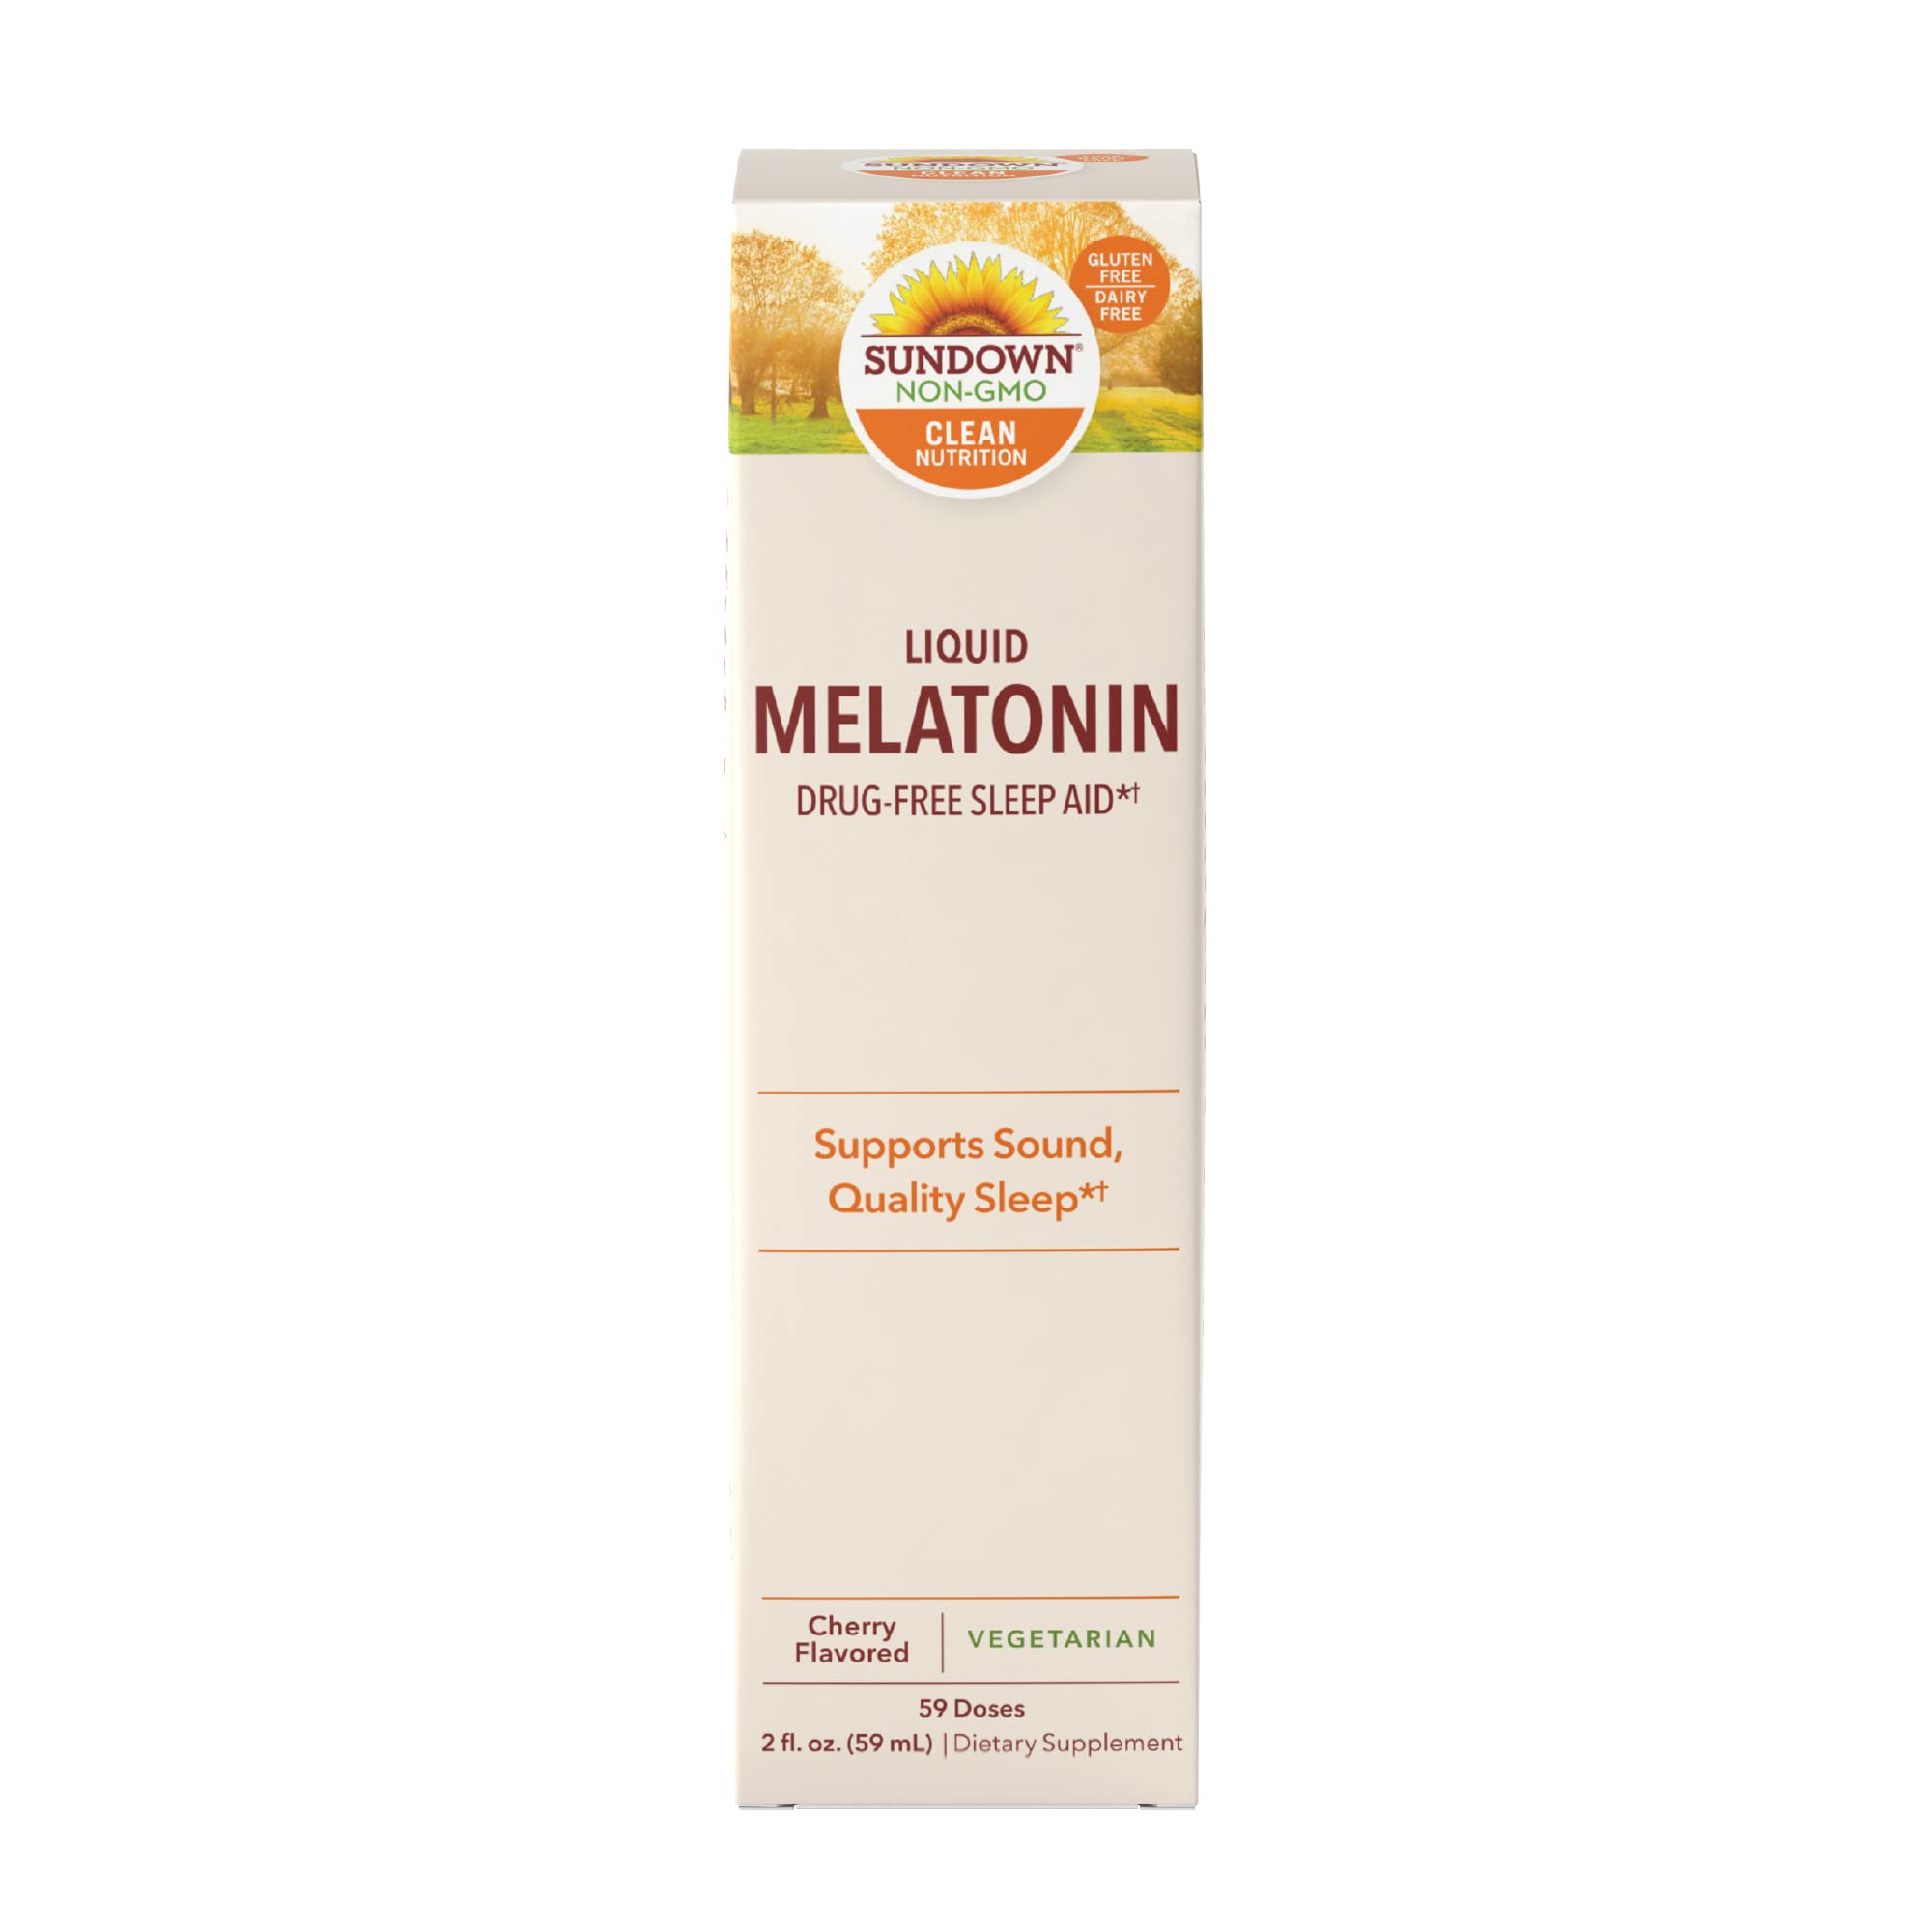 Sundown Sublingual Melatonin Liquid Cherry Flavor, 2 Ounces